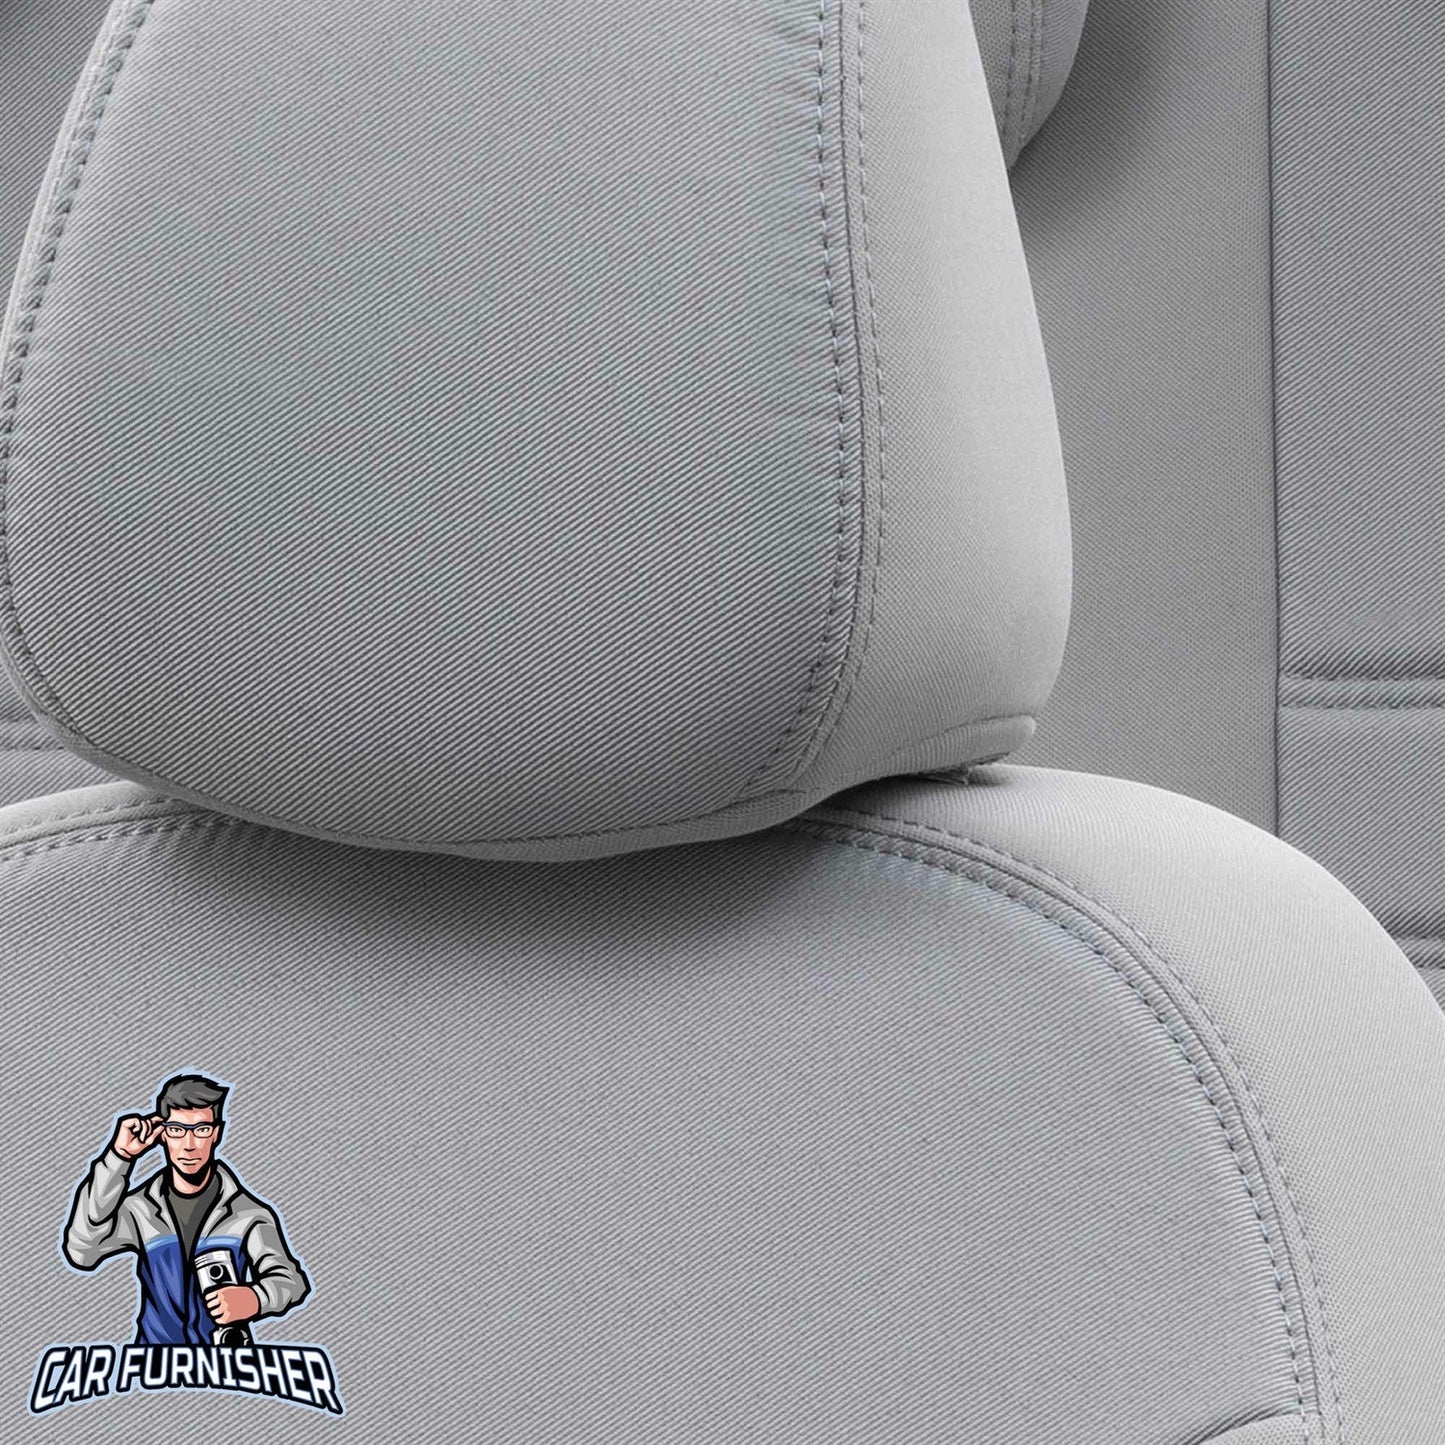 Volkswagen Scirocco Seat Cover Original Jacquard Design Light Gray Jacquard Fabric